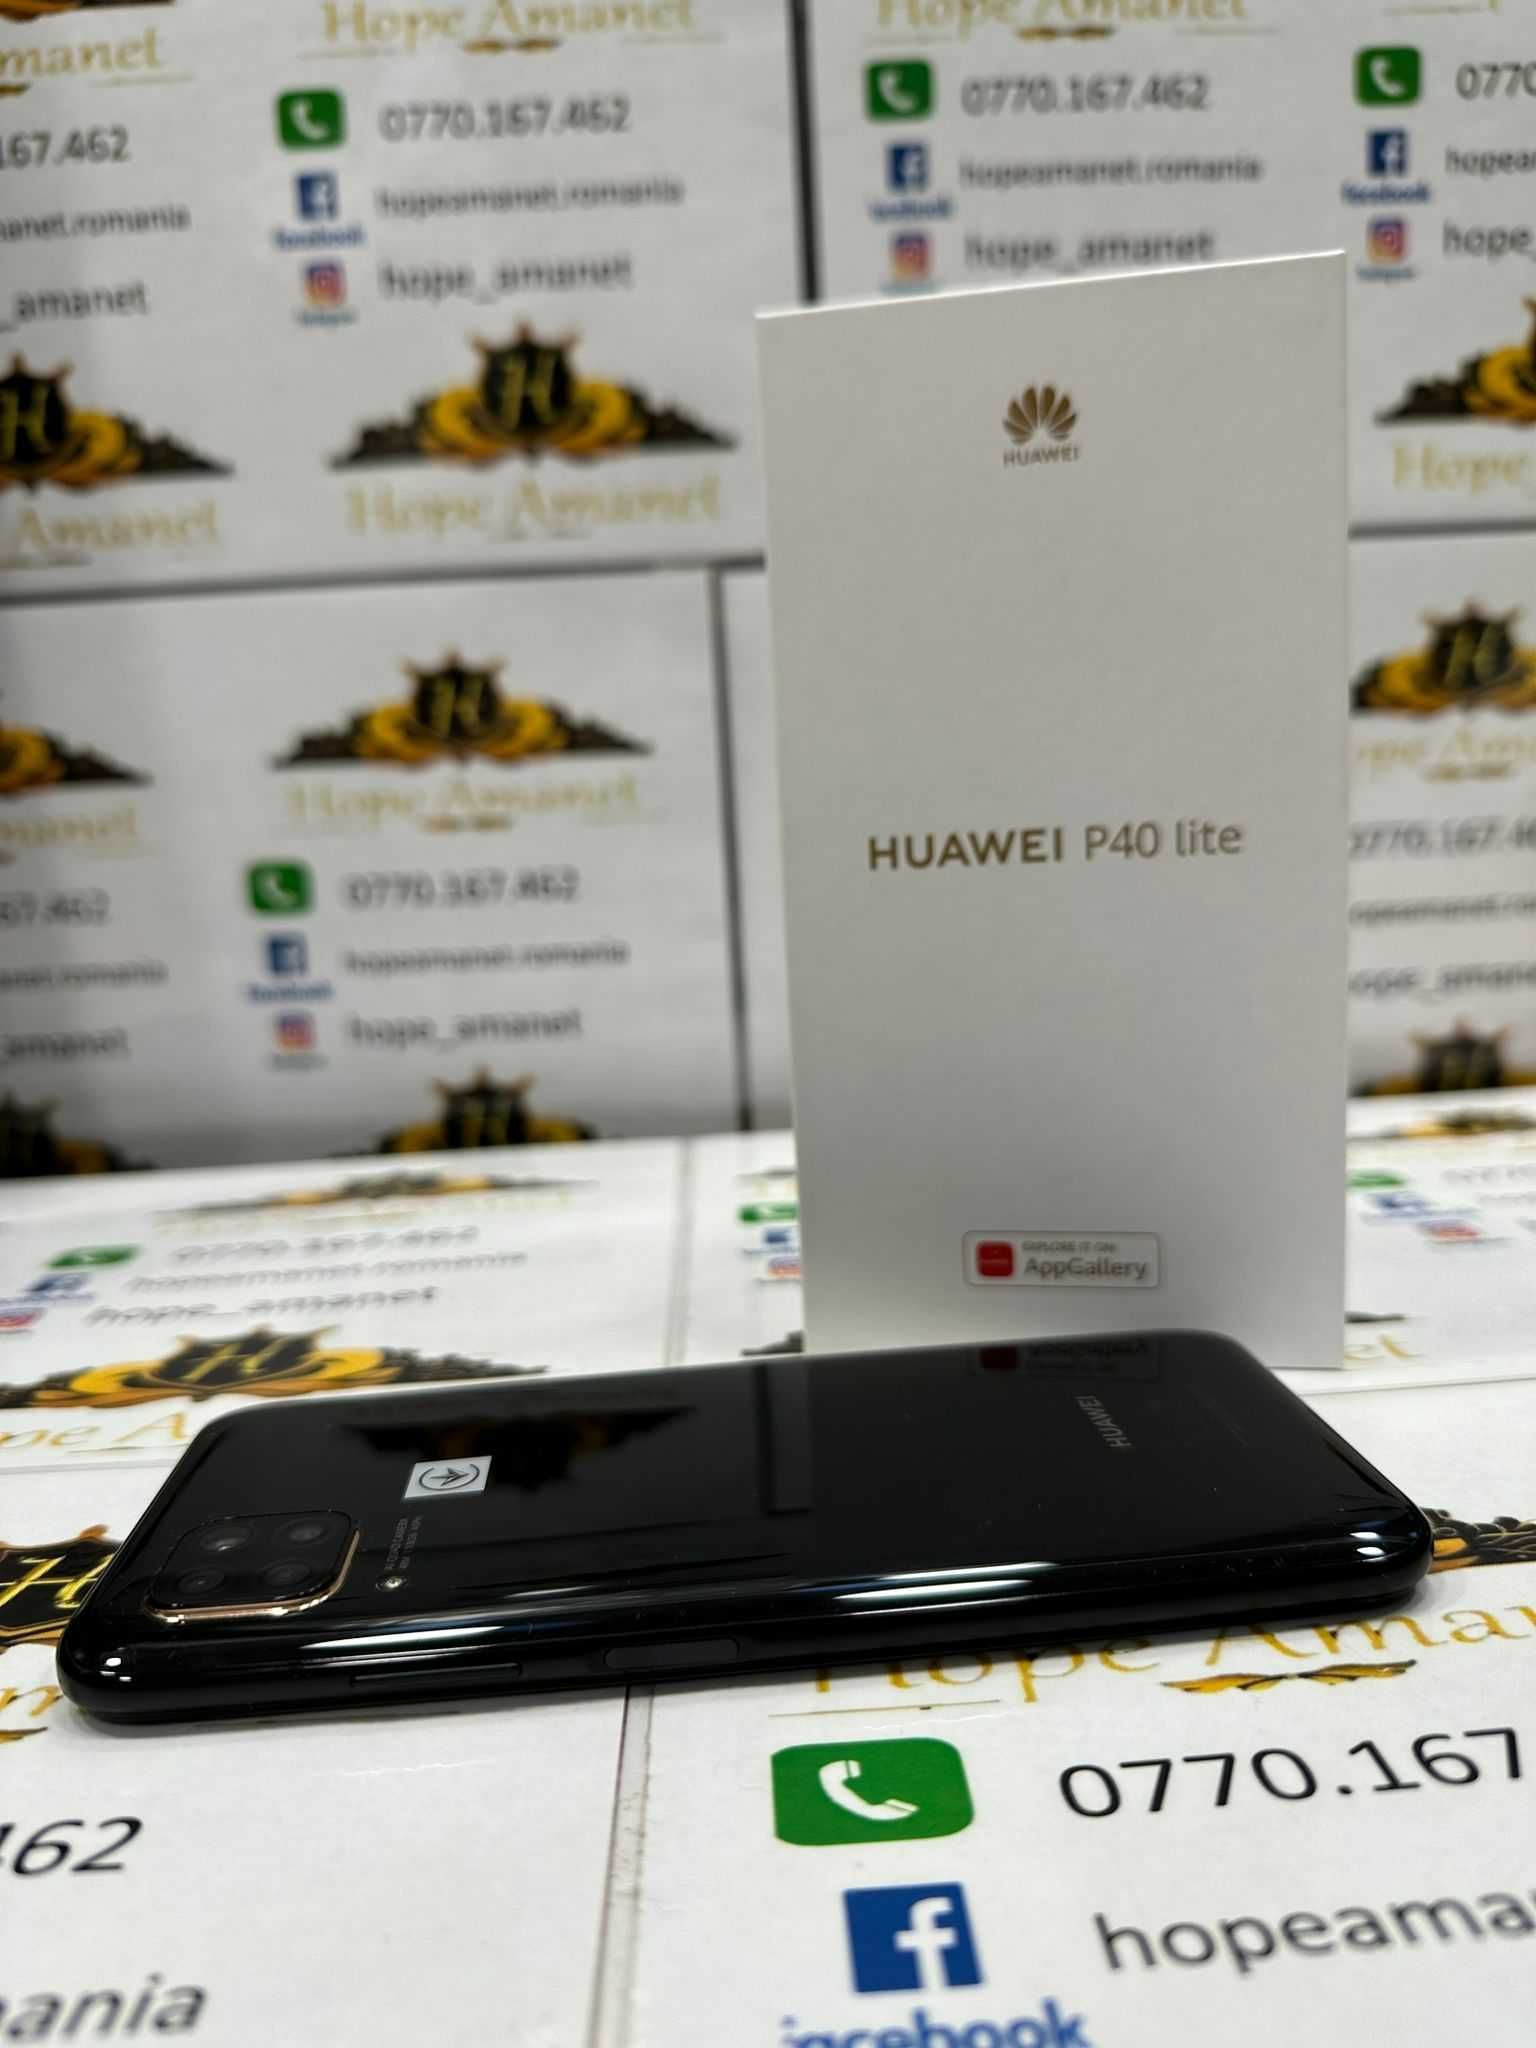 HOPE AMANET P12 - Huawei P40 Lite / 128-6 GB / FULL BOX !!